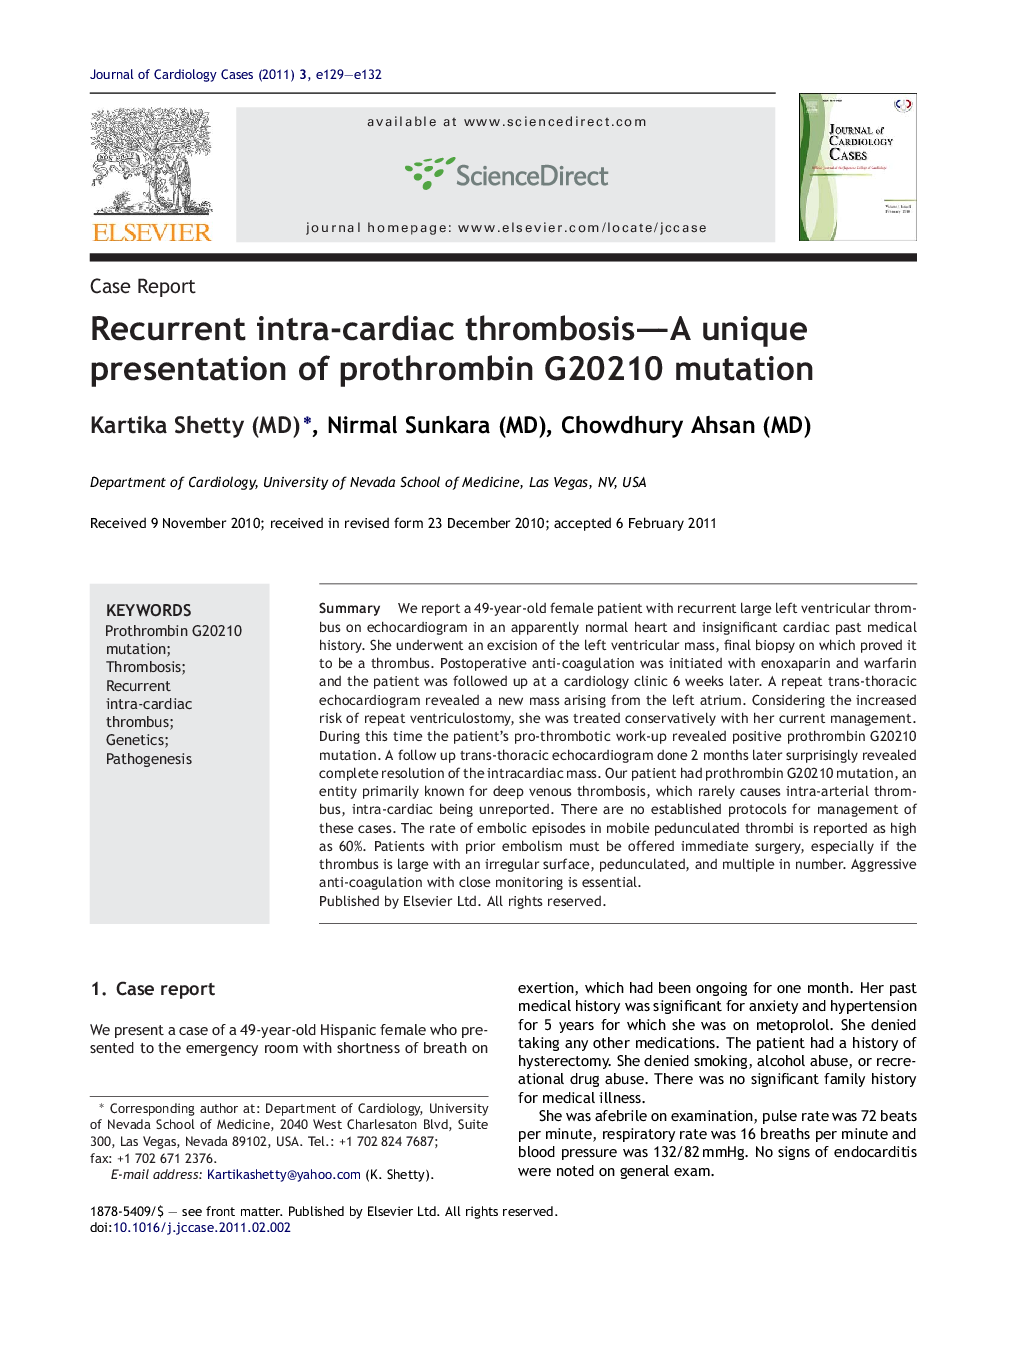 Recurrent intra-cardiac thrombosis—A unique presentation of prothrombin G20210 mutation